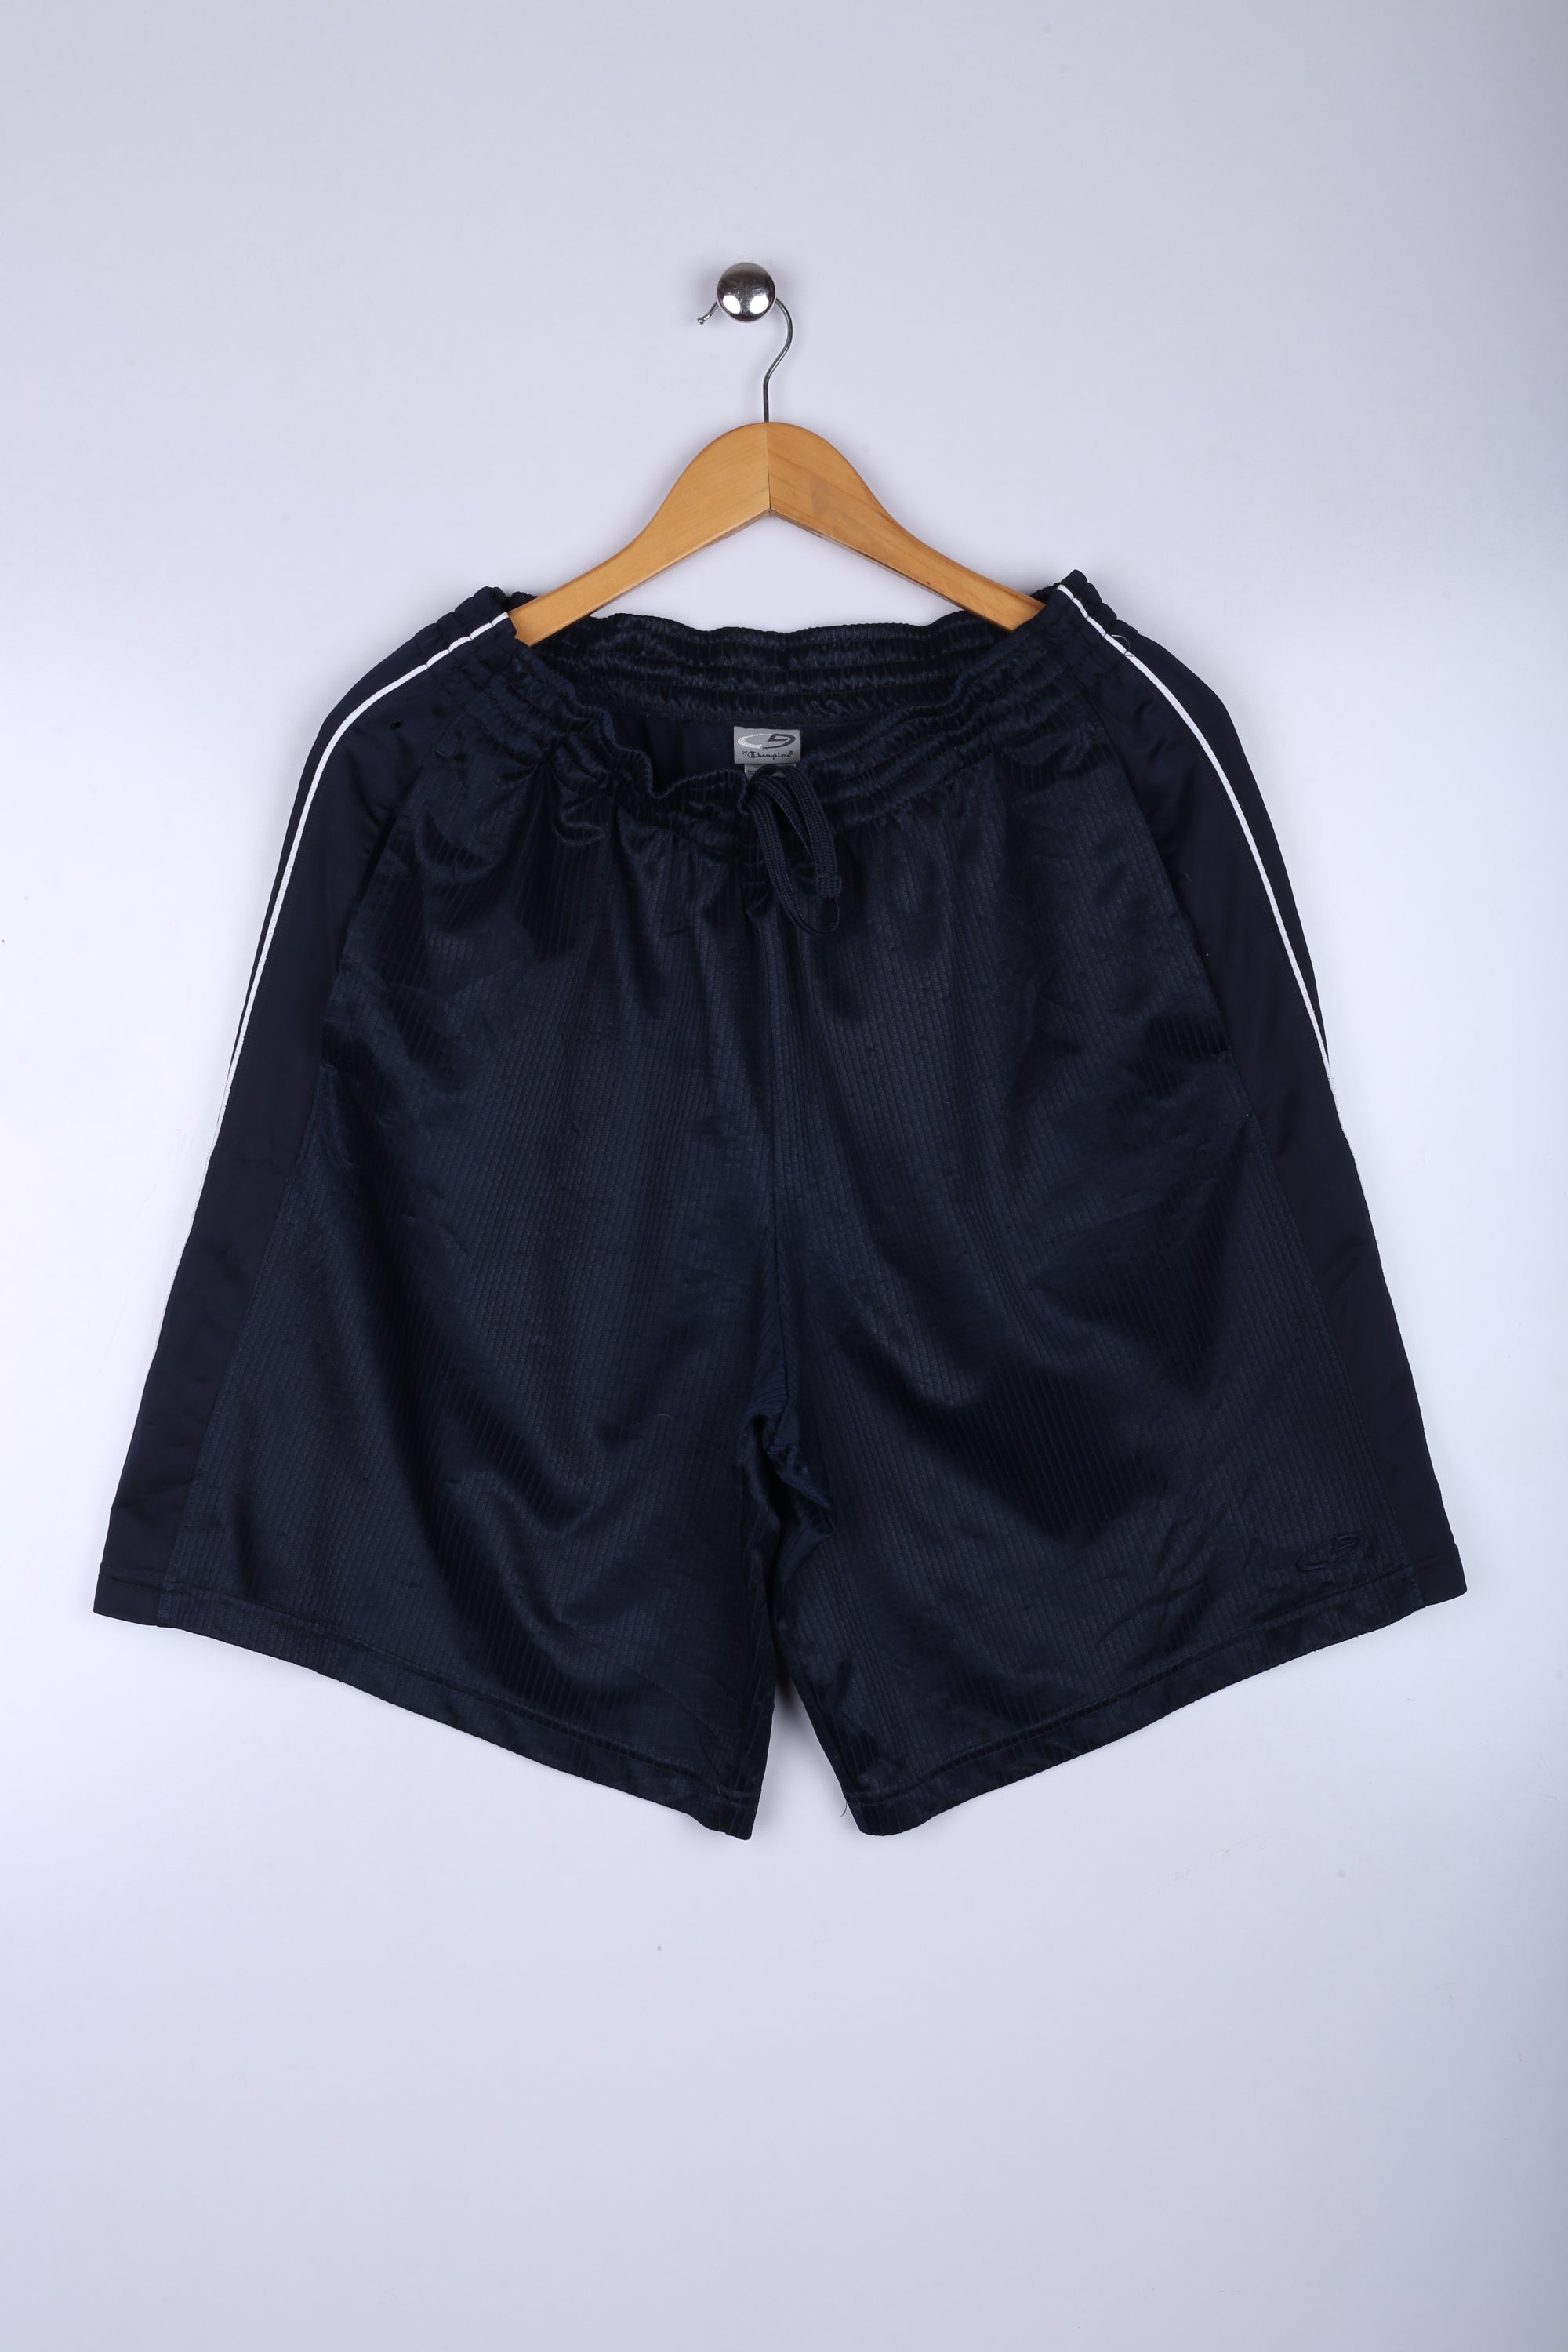 Vintage Unbranded Shorts Navy